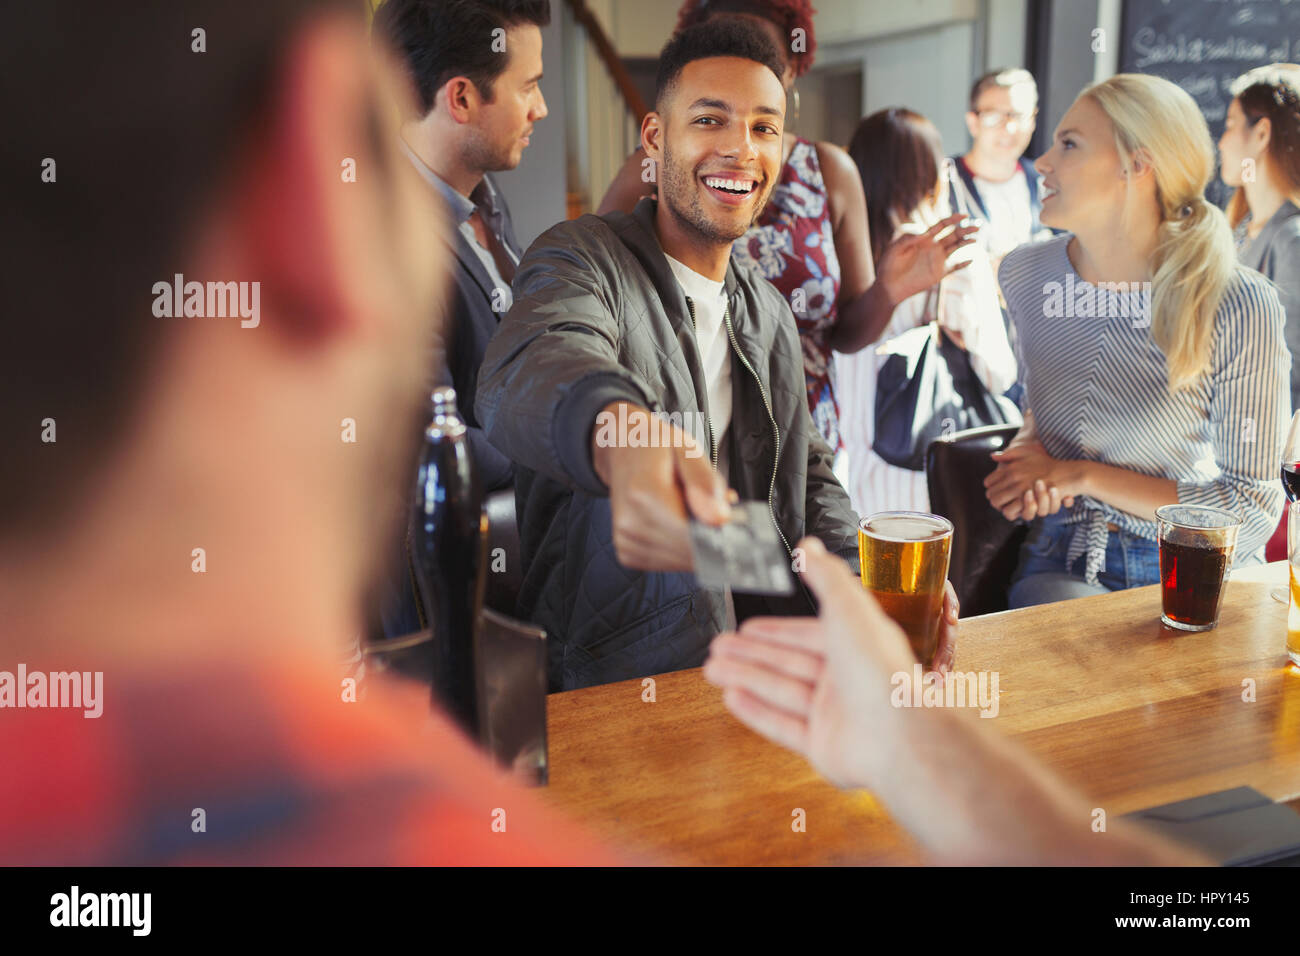 Smiling man paying bartender with credit card at bar Stock Photo